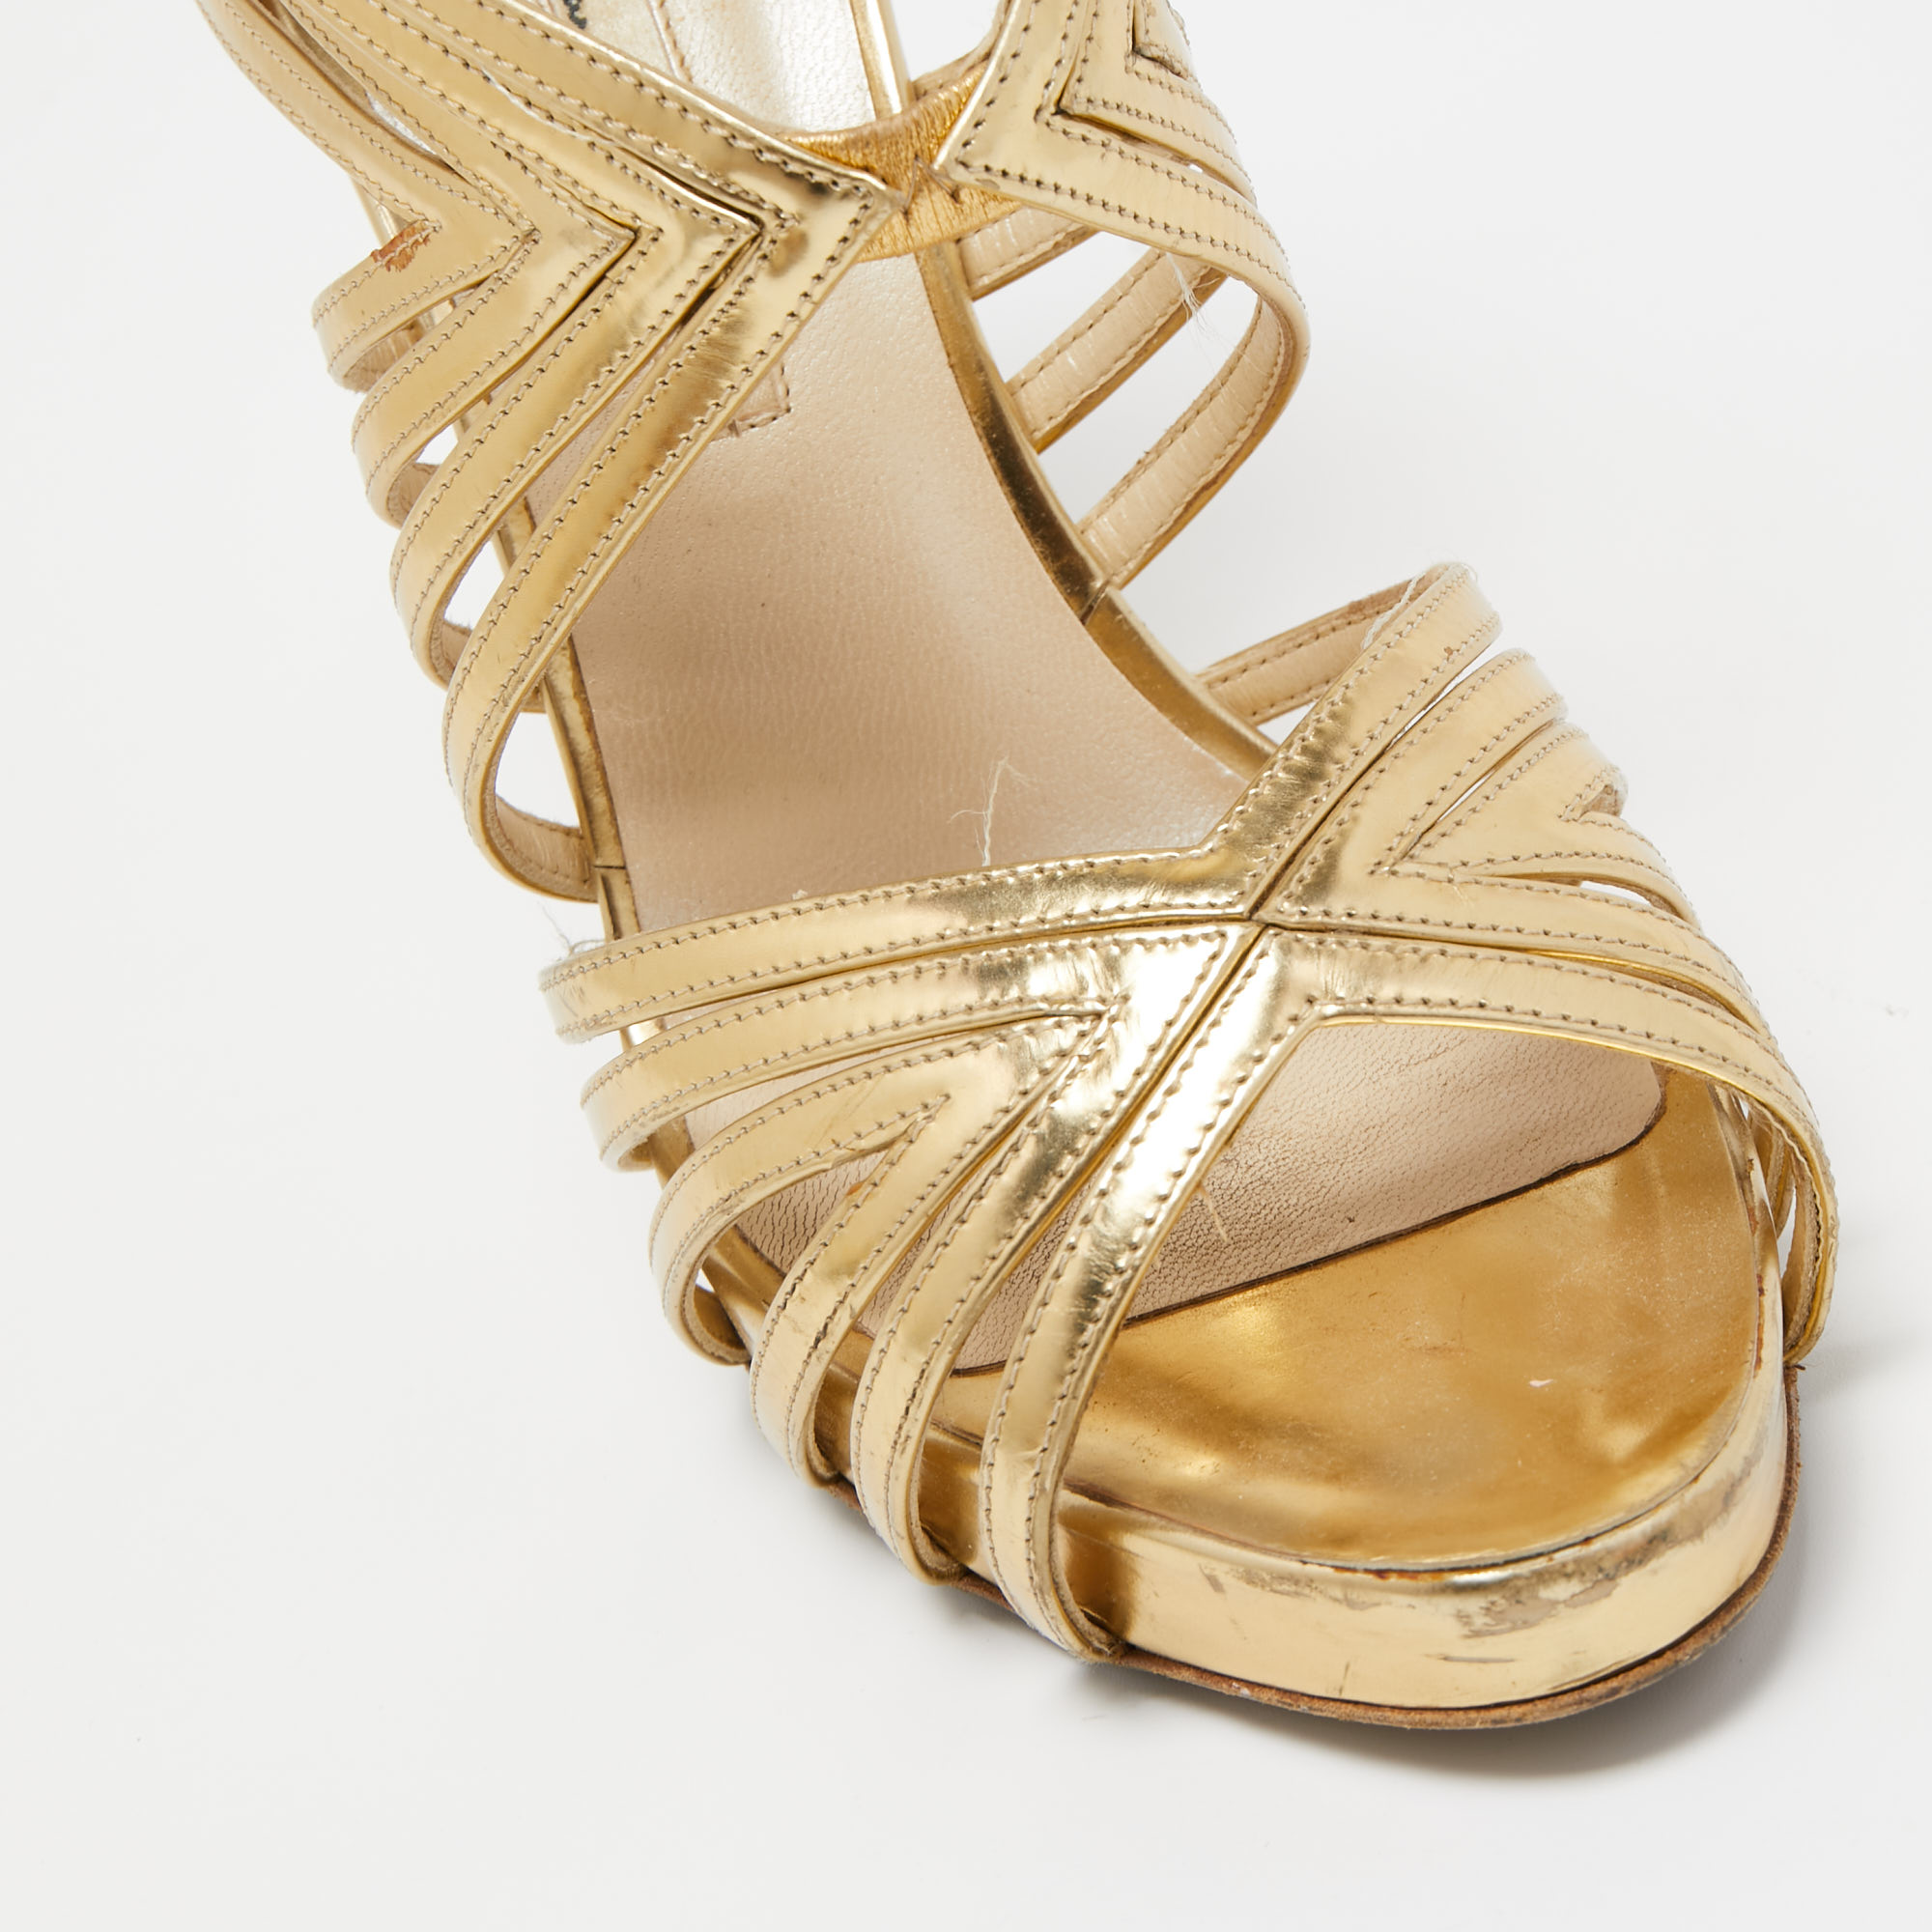 Oscar De La Renta Gold Leather Strappy Sandals Size 37.5